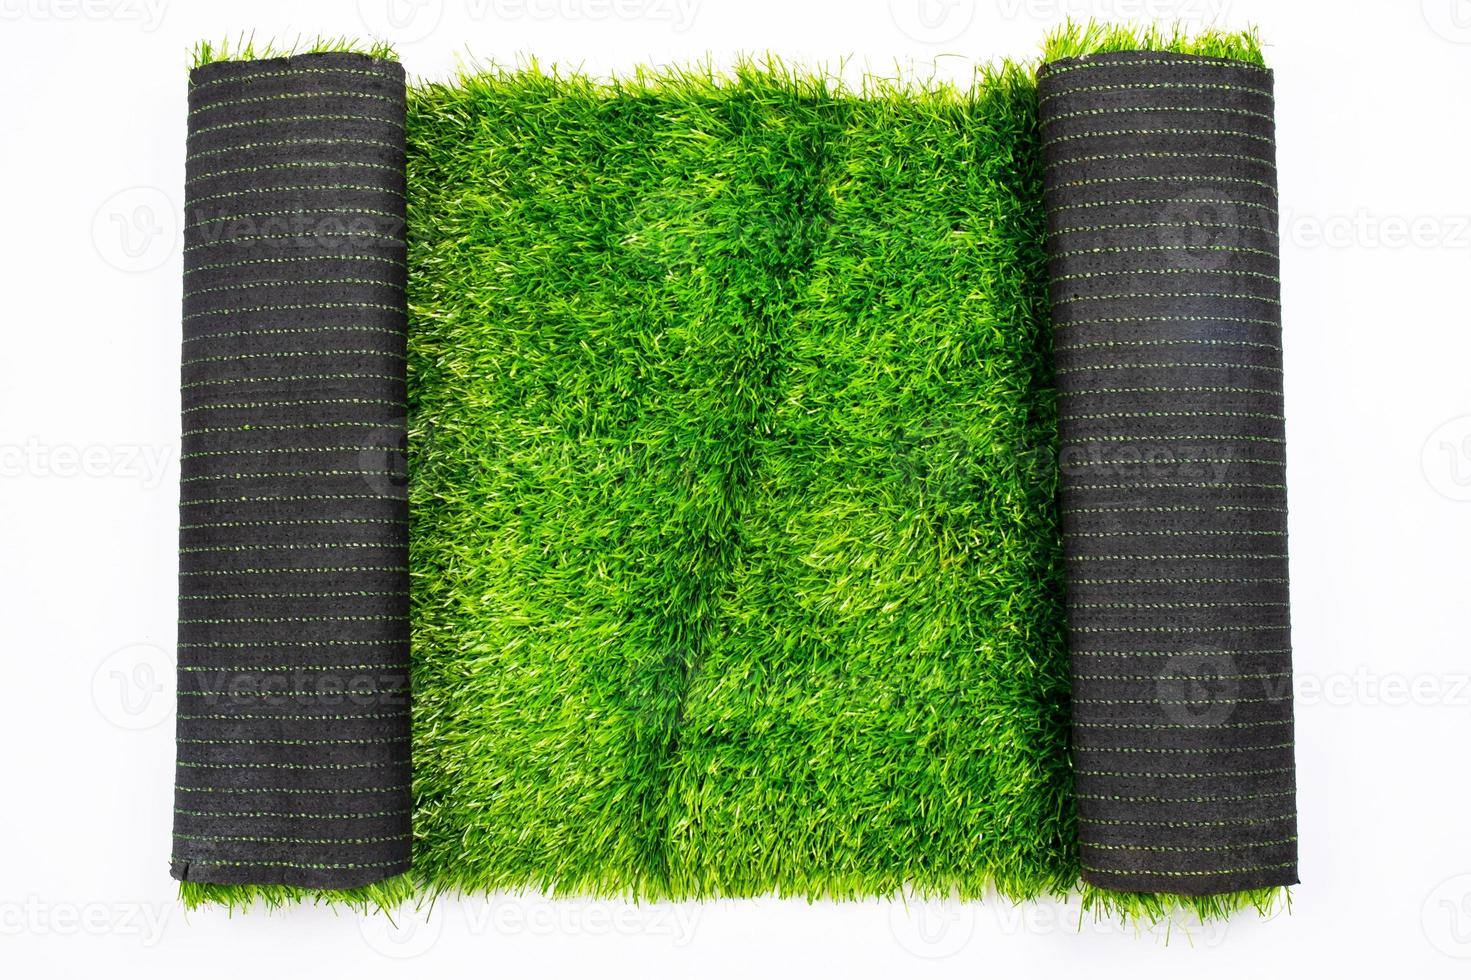 rolo de grama verde artificial isolada no fundo branco, gramado, cobrindo campos esportivos foto